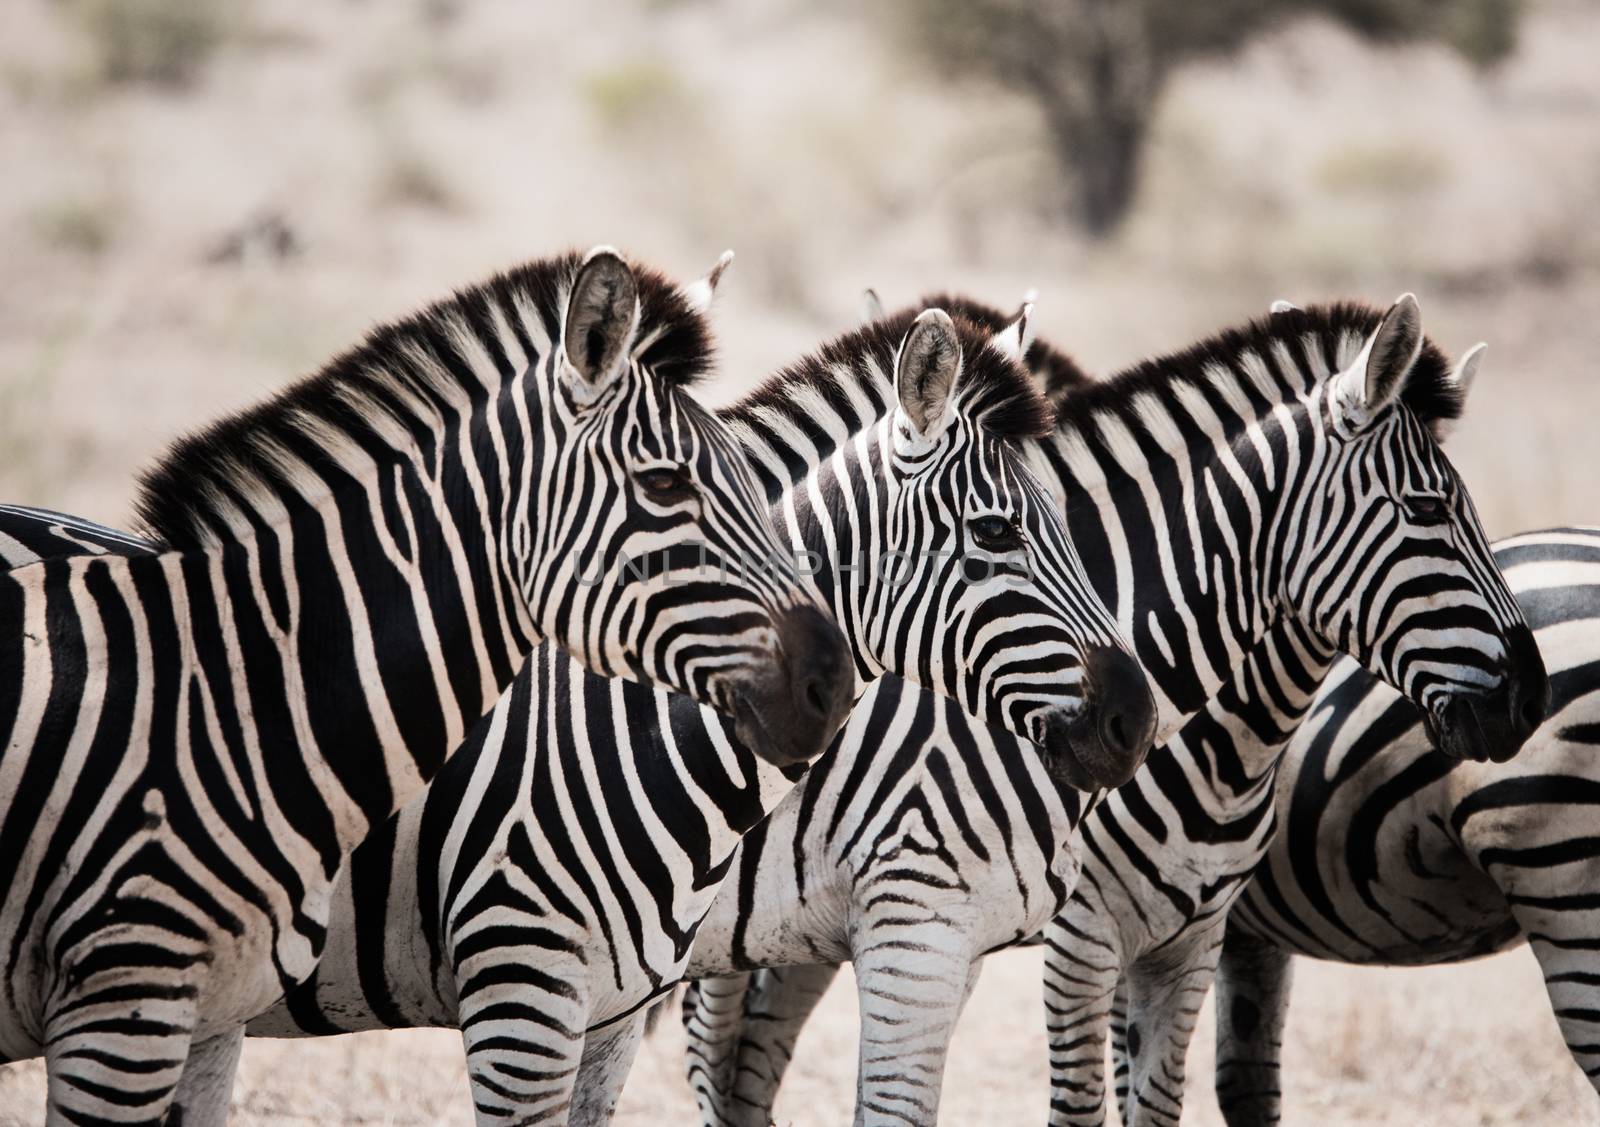 Zebras starring in the Kruger National Park, South Africa.